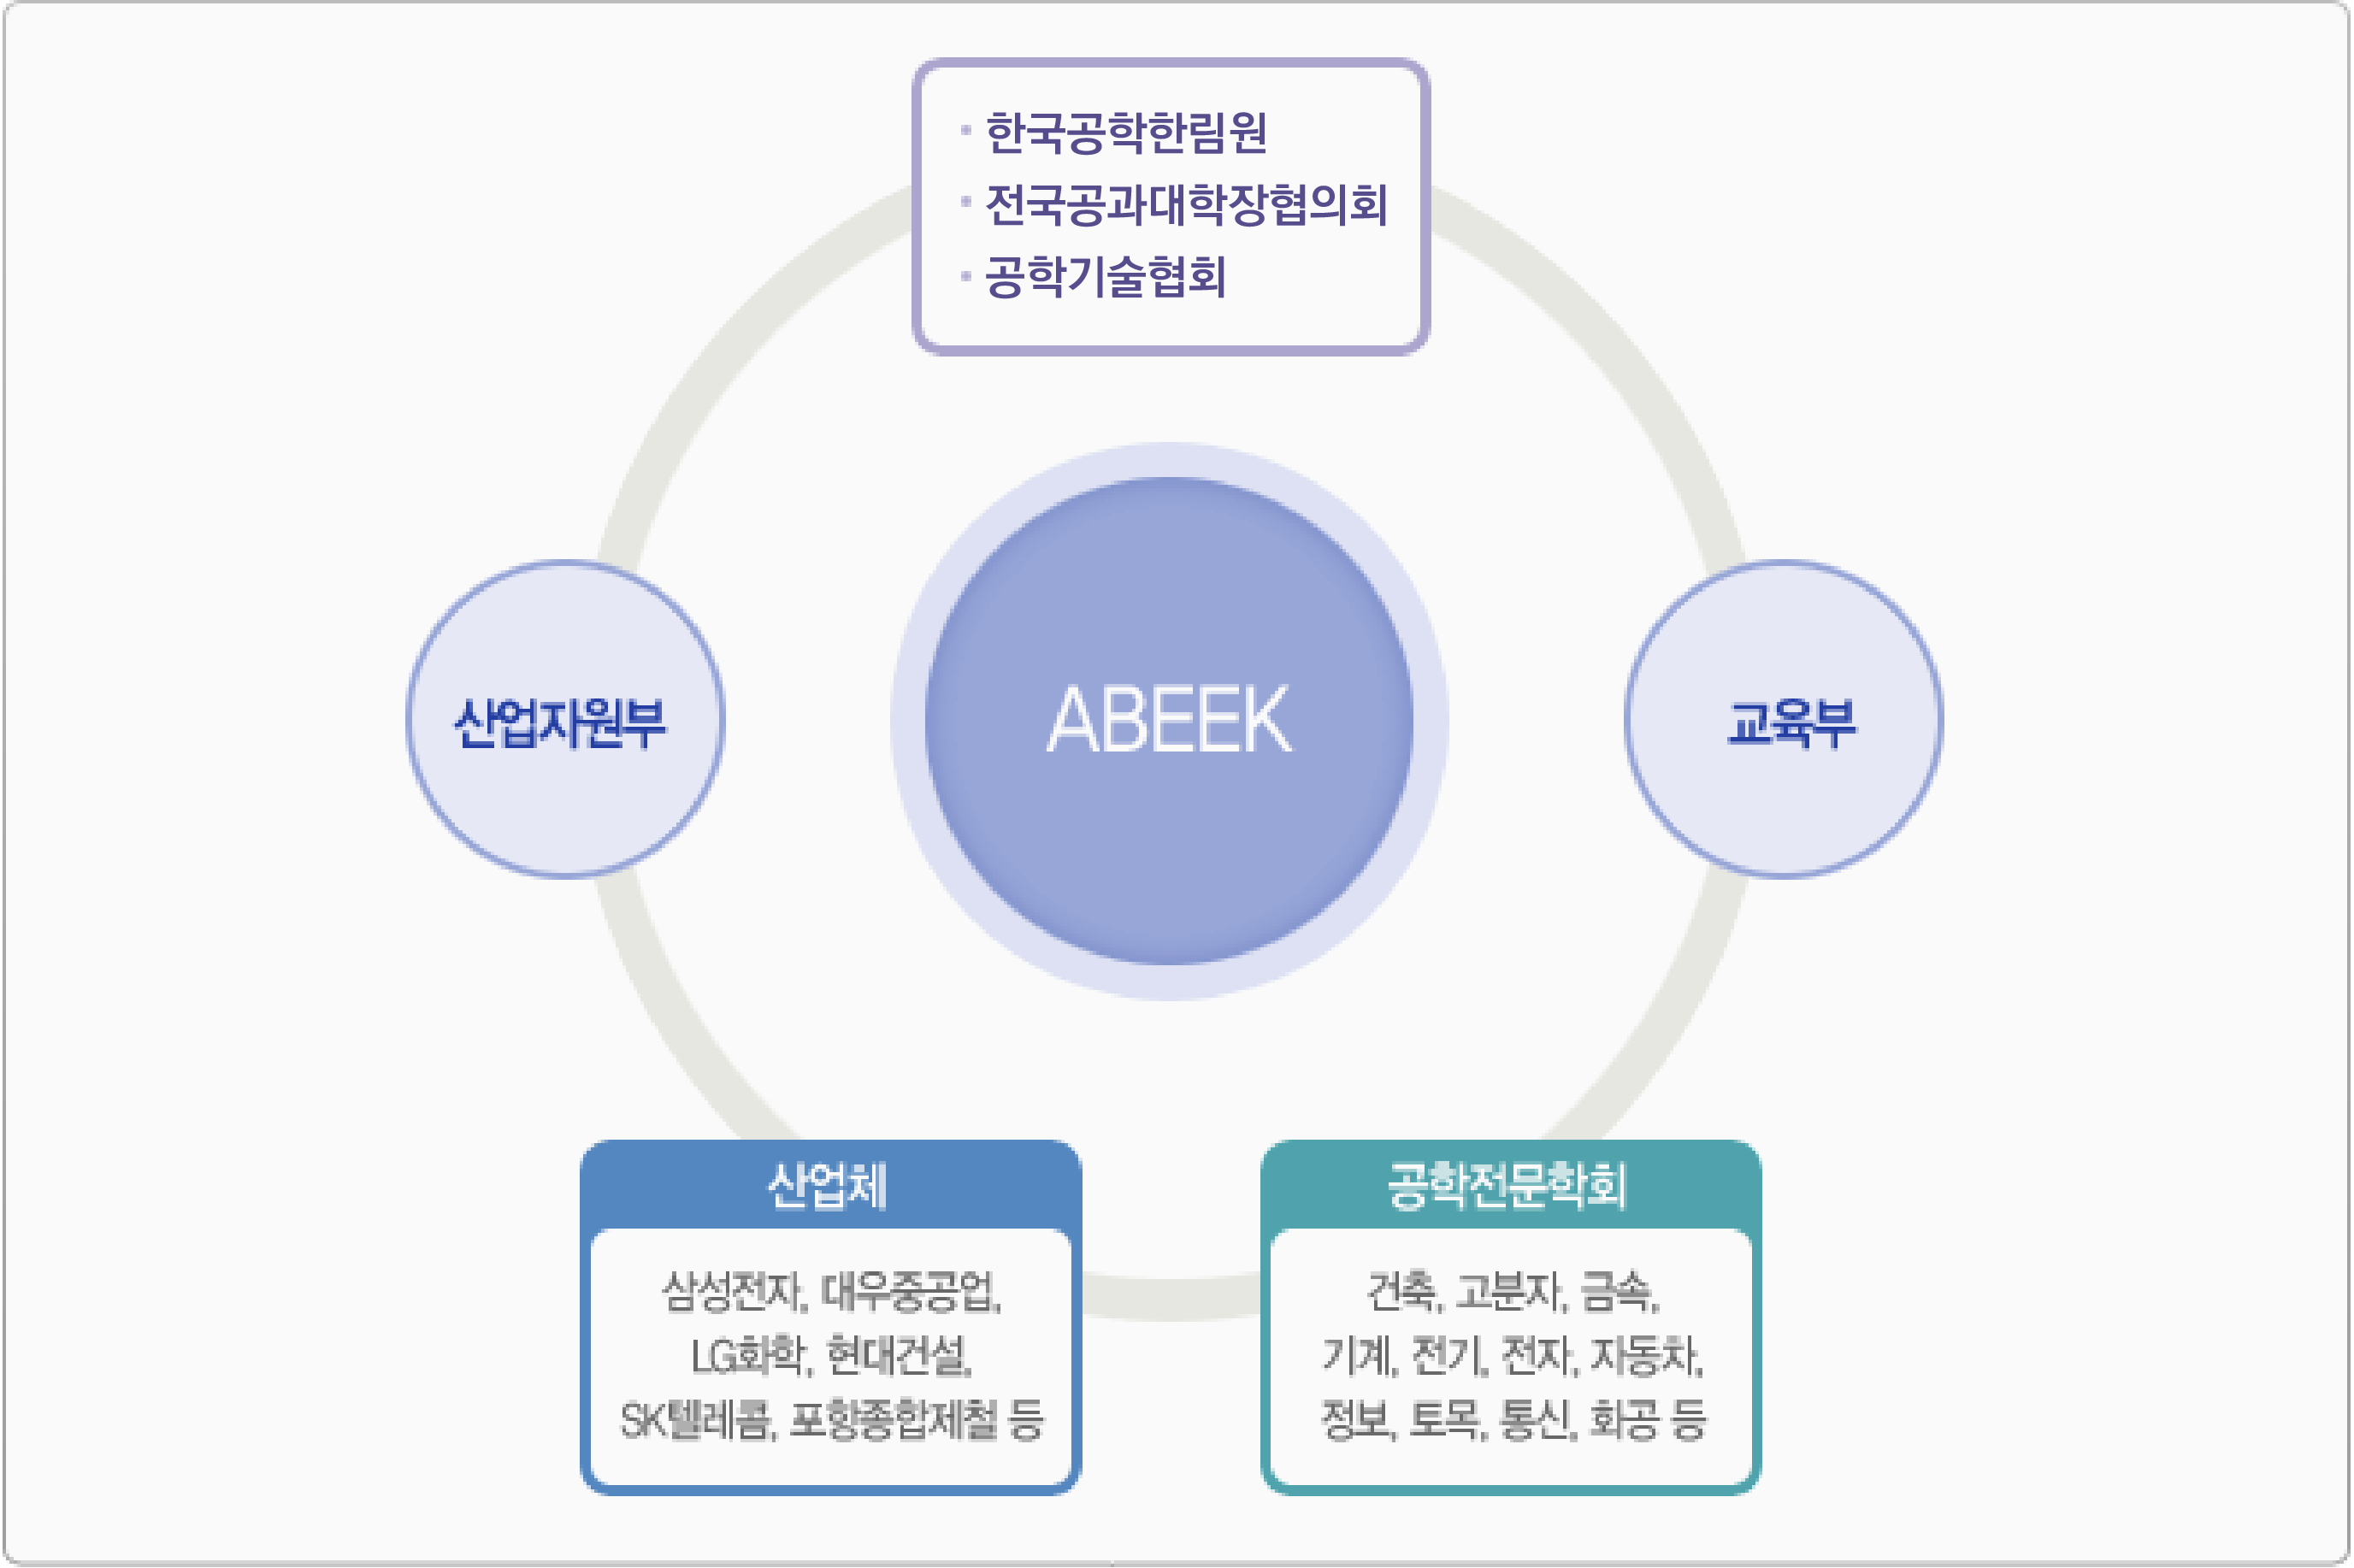 ABEEK : 한국 공학 한림원, 한국공학기술학회, 교육부, 산업자원부, 전국공과대학장협의회, 산업체, 공학관련전문학회가 참여하여 창립